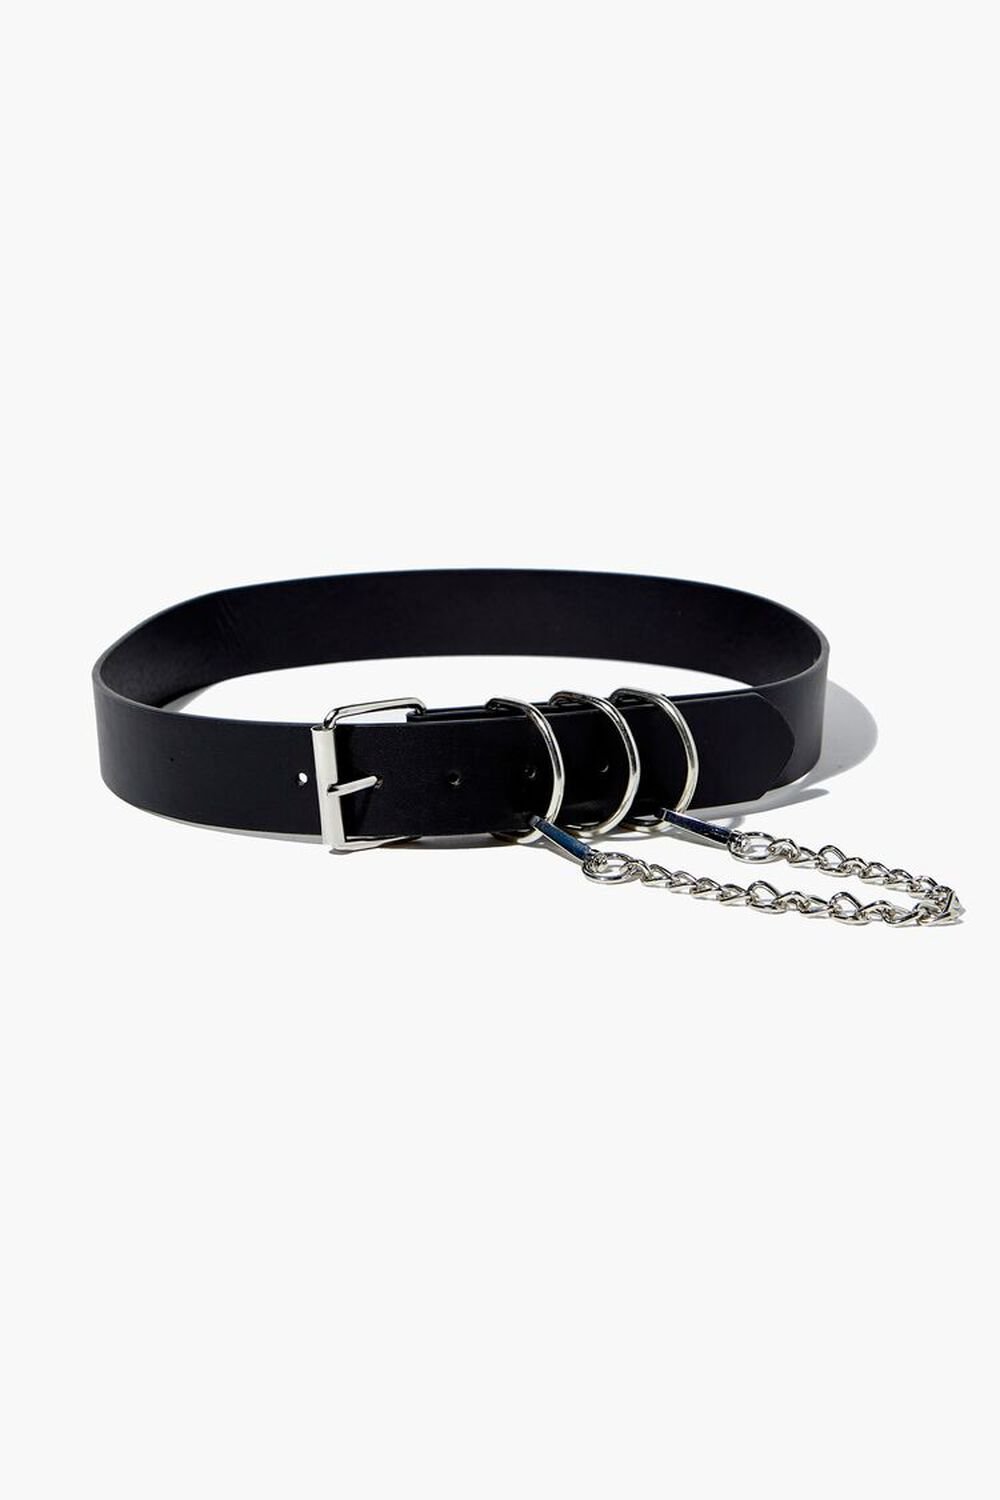 BLACK/SILVER Faux Leather Wallet Chain Belt, image 1